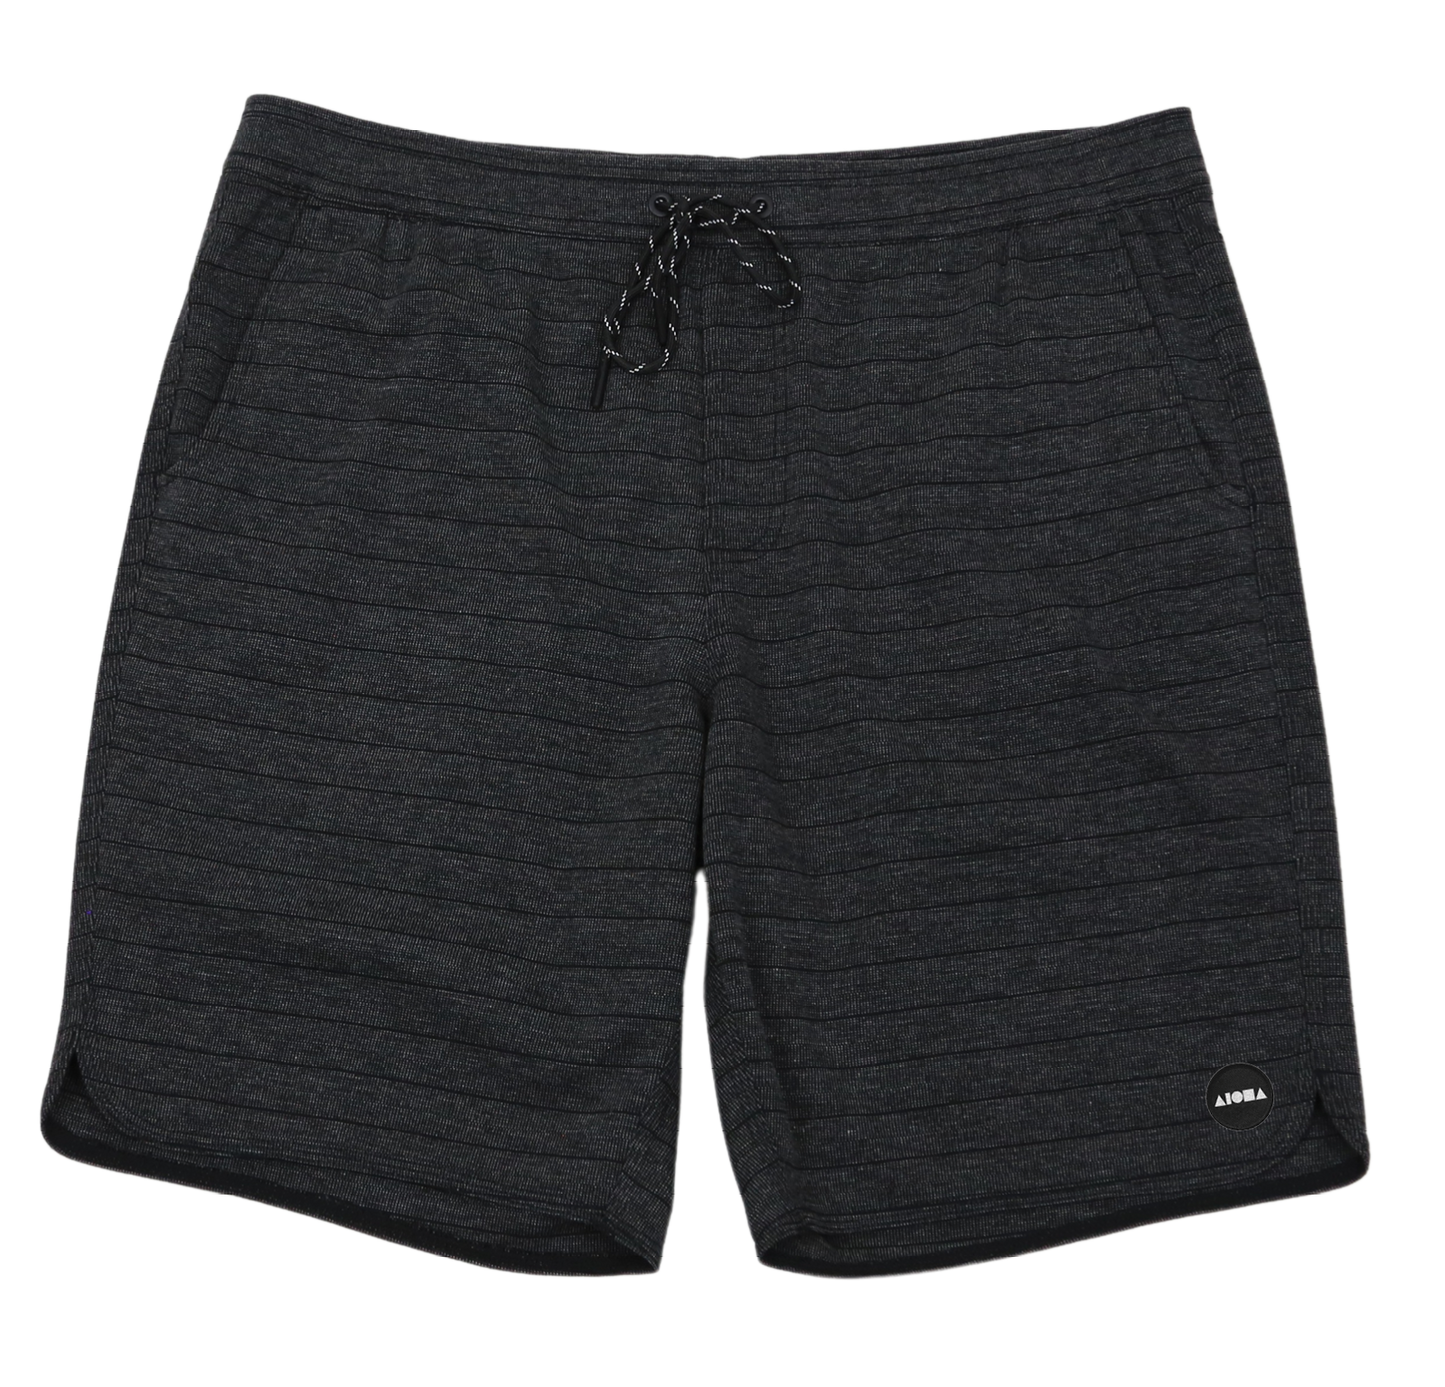 LOUNGIN Charcoal Men's Walk Shorts Wholesale